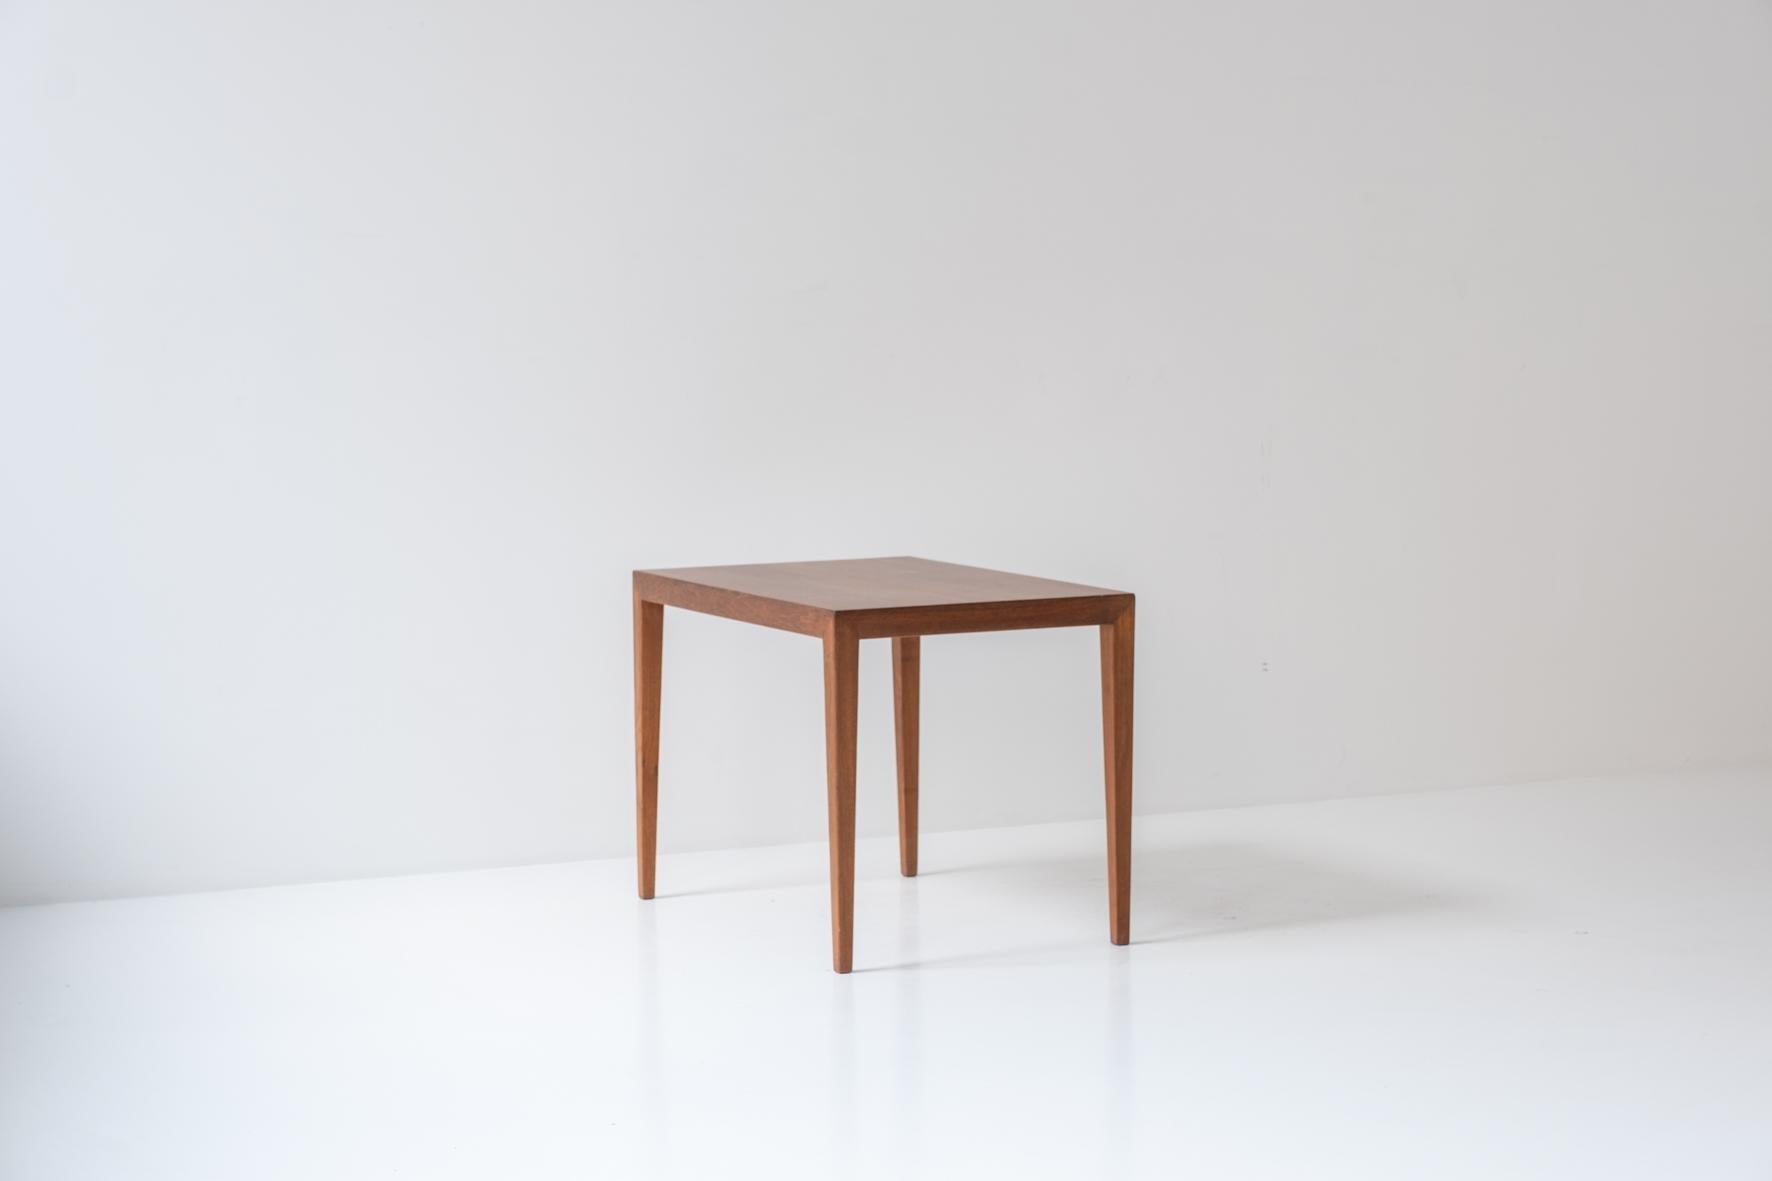 Scandinavian Modern Elegant side table by Severin Hansen for Haslev Møbelfabrik, Denmark 1950’s.